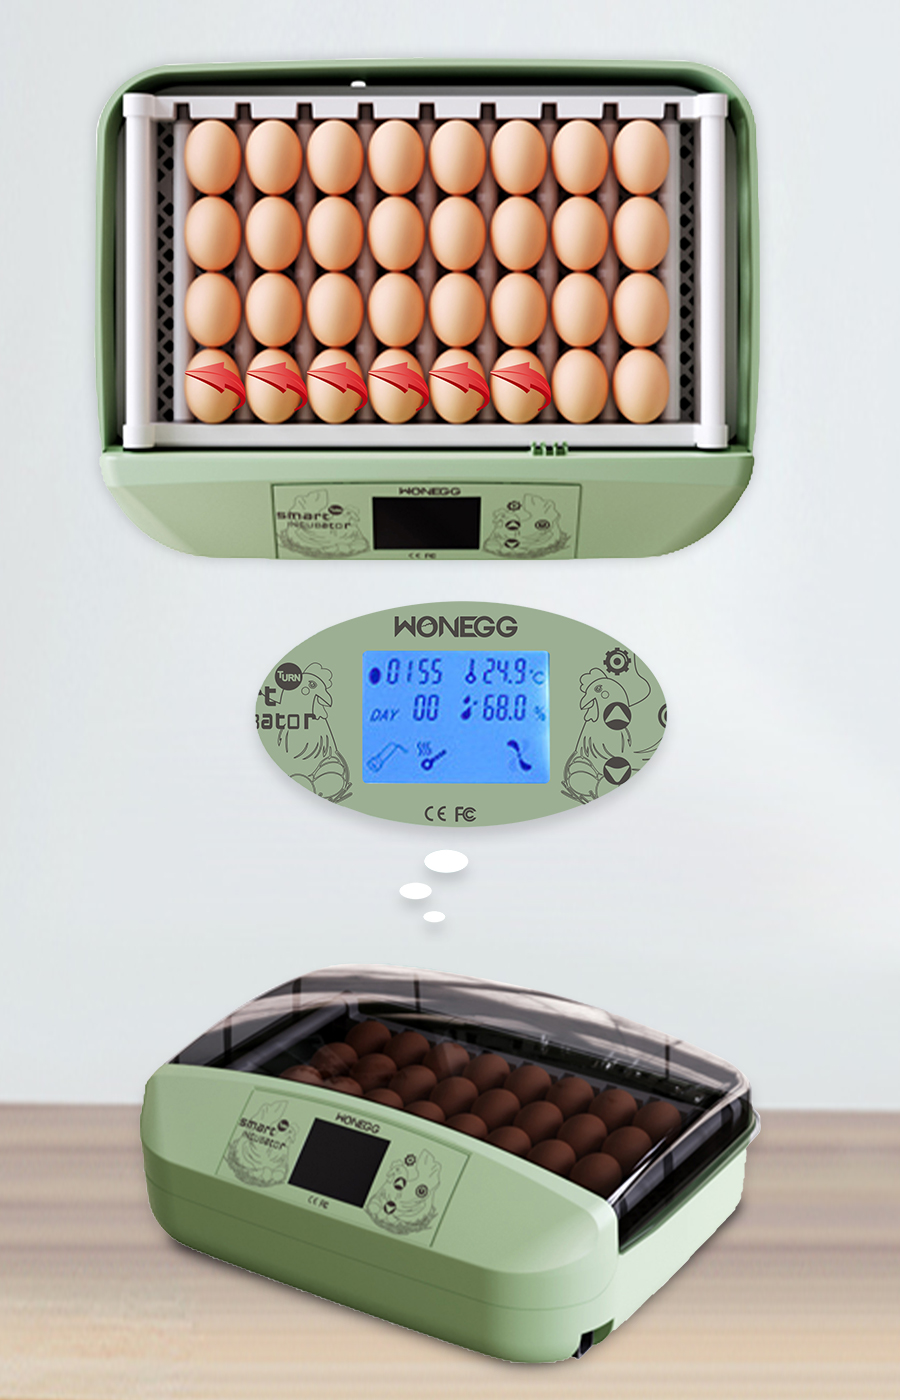 
ostrich incubator 6 egg
couveuse oeuf automatique egg incubator automatic
